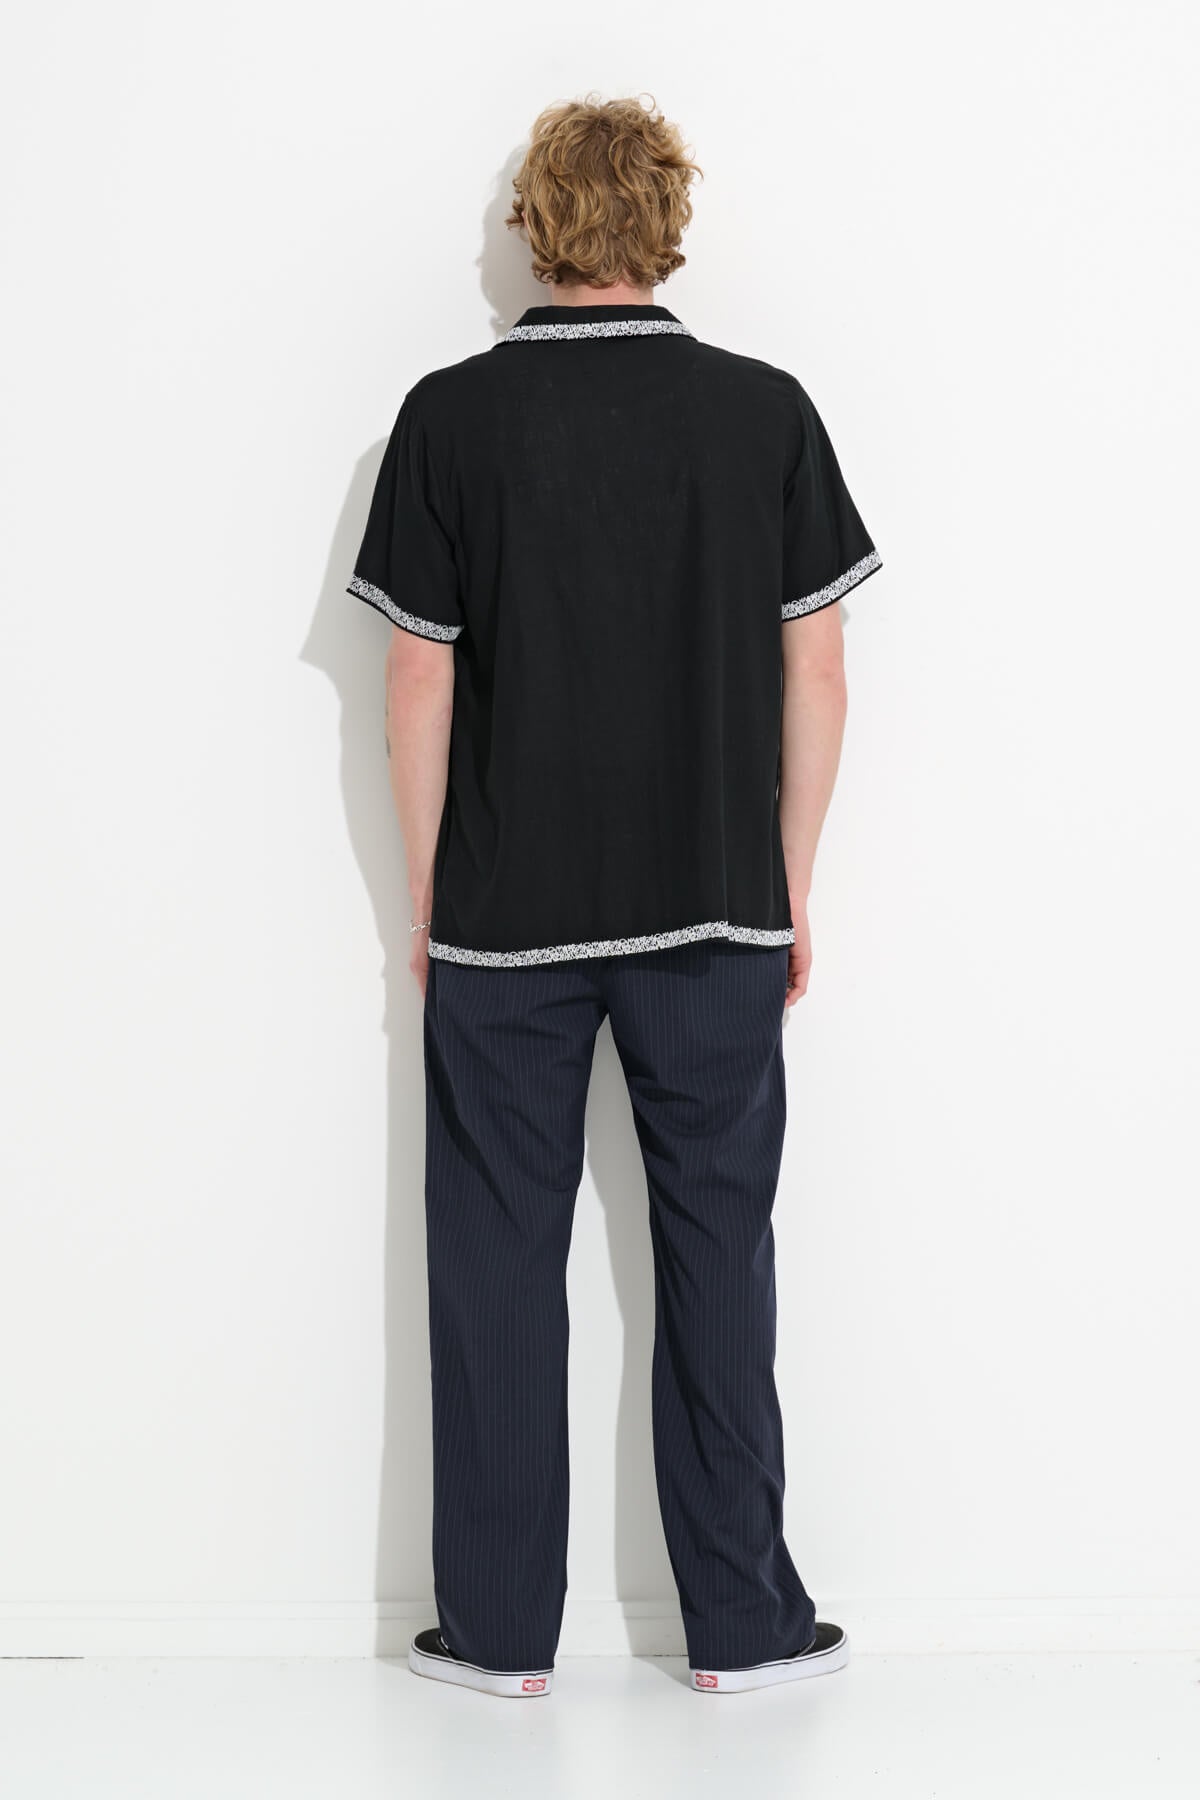 Misfit Shapes - Pandaan Linen SS Shirt - Black